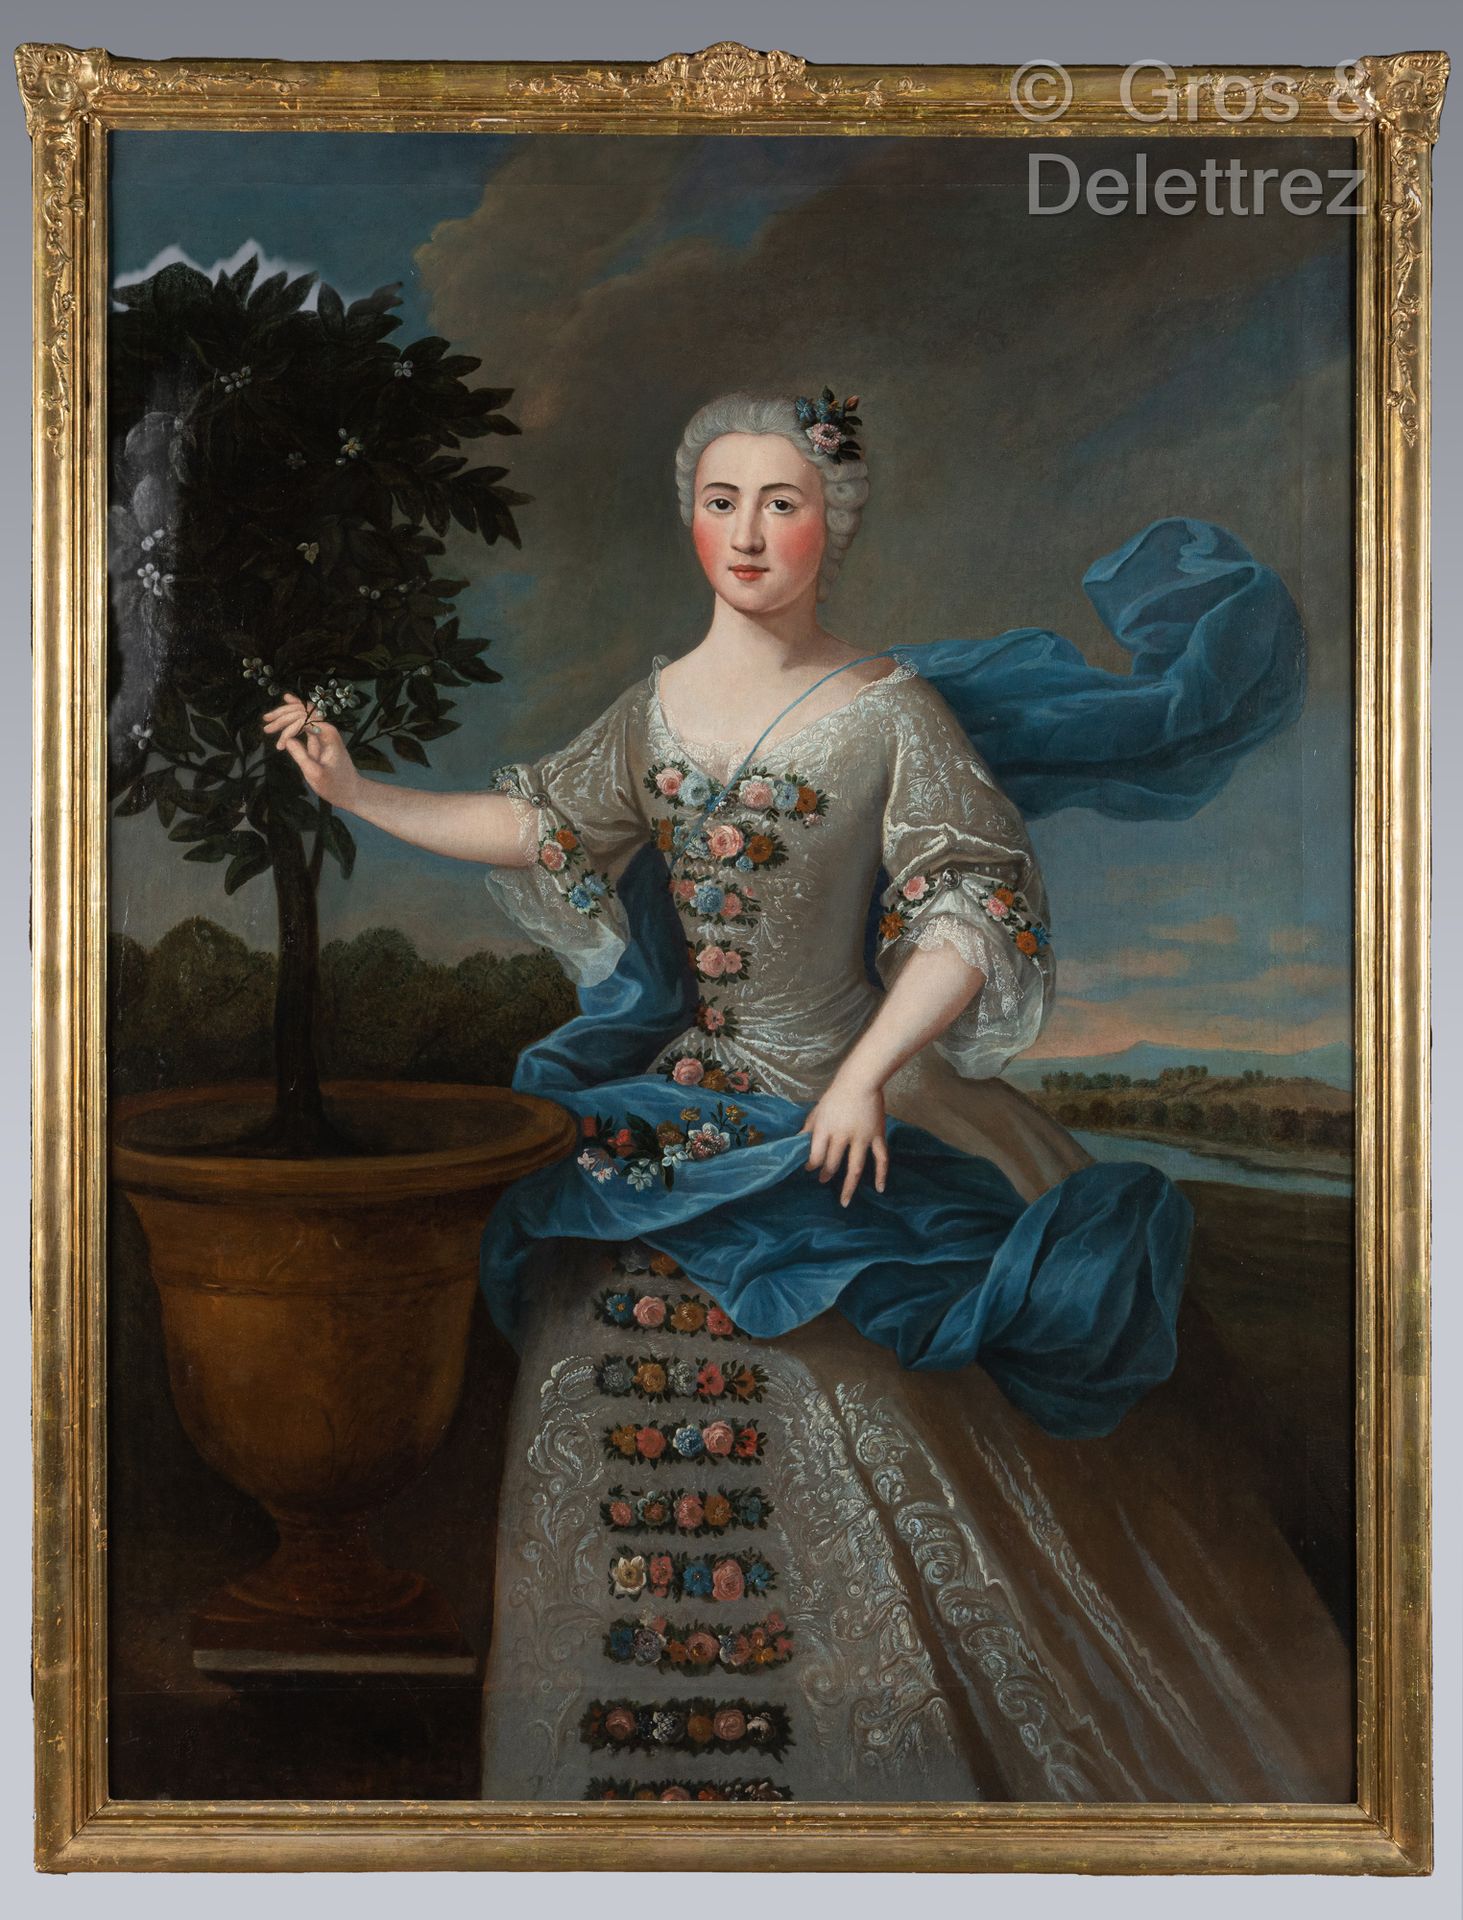 Null *18世纪的法国画派
穿着灰色衣服的妇女采摘花的画像
布面油画
162 x 118厘米。重新清洗、修复并重新上色